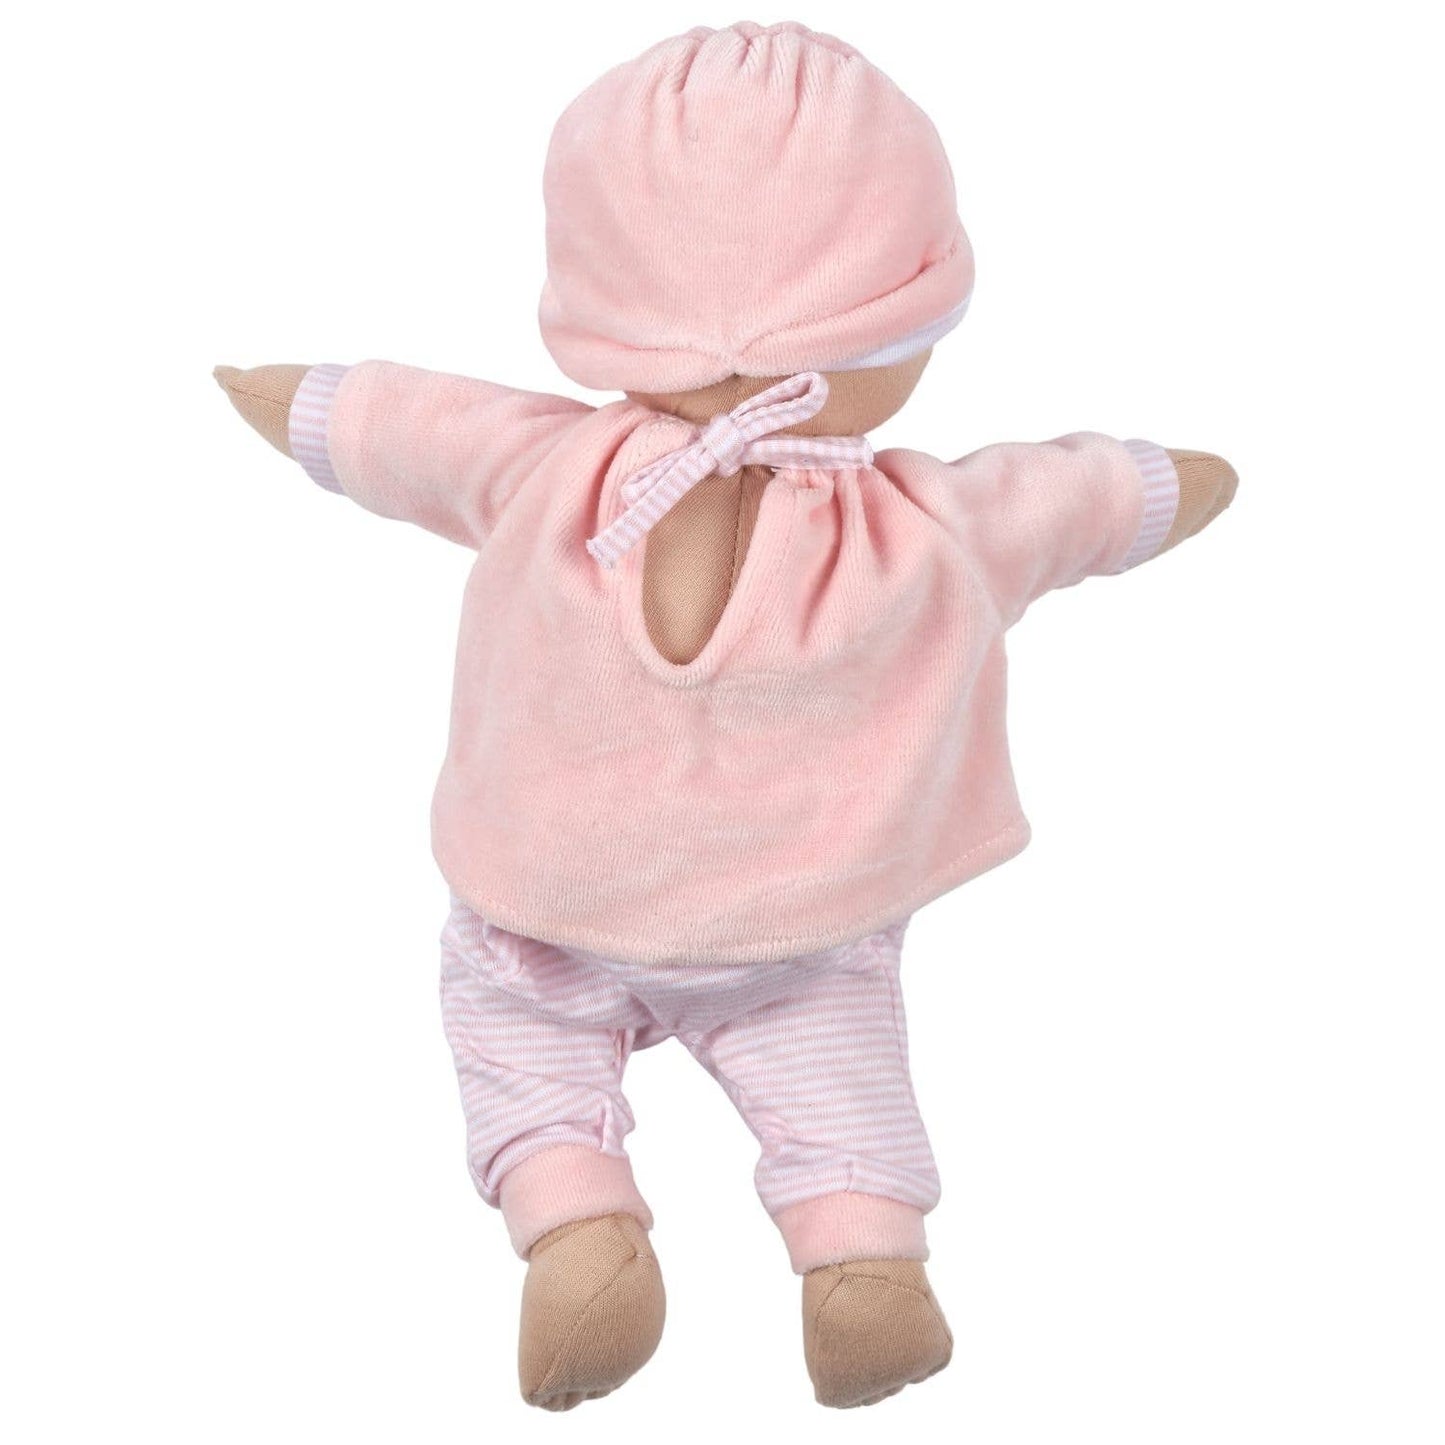 Cherub Baby Girl with Pink Dress